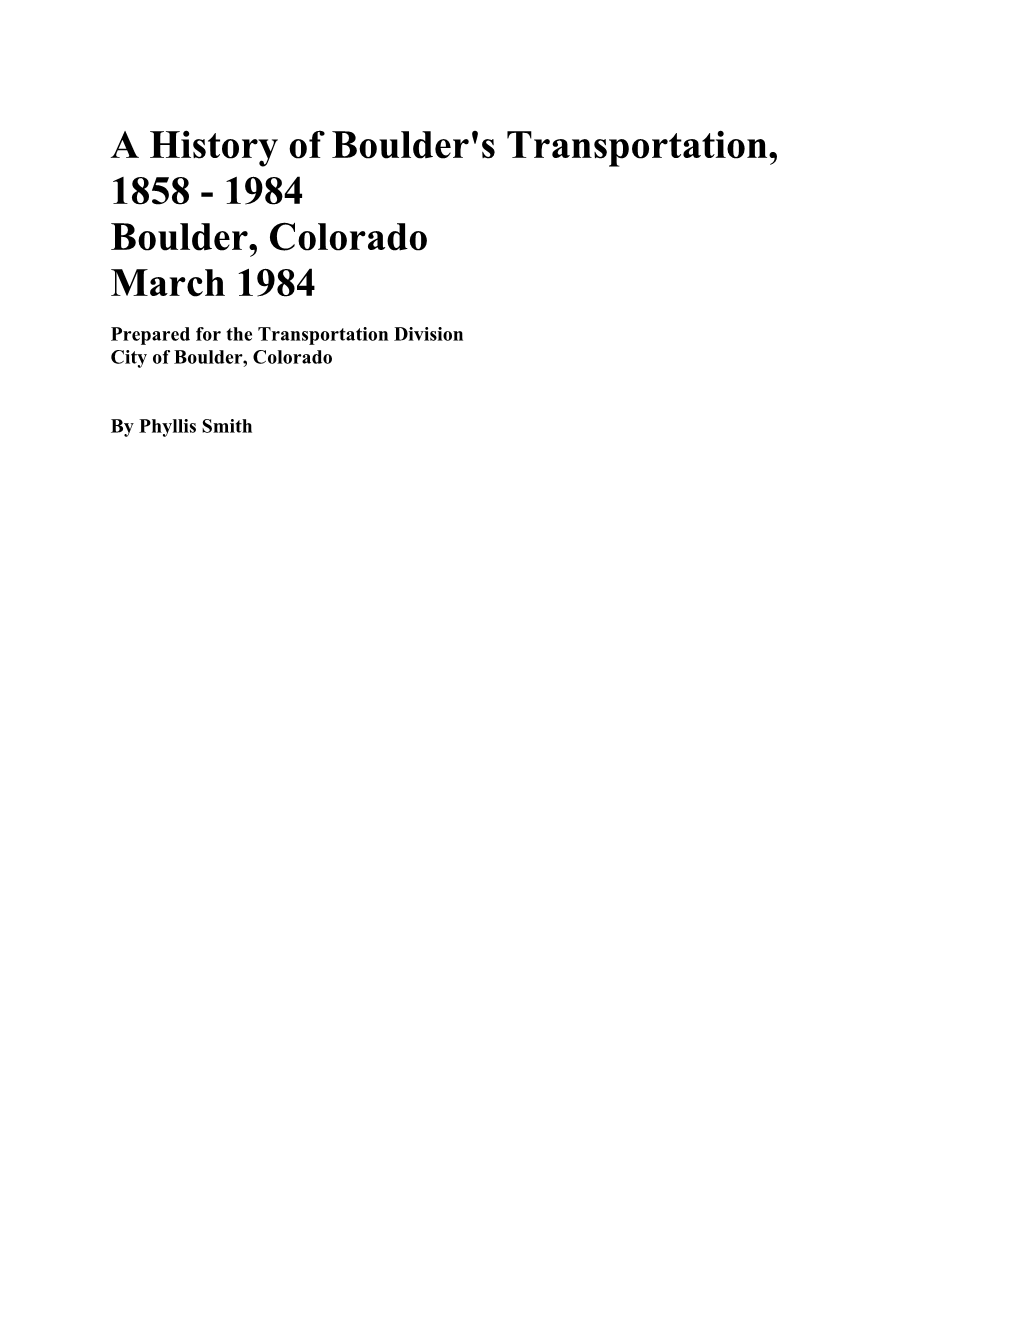 A History of Boulder's Transportation, 1858 - 1984 Boulder, Colorado March 1984